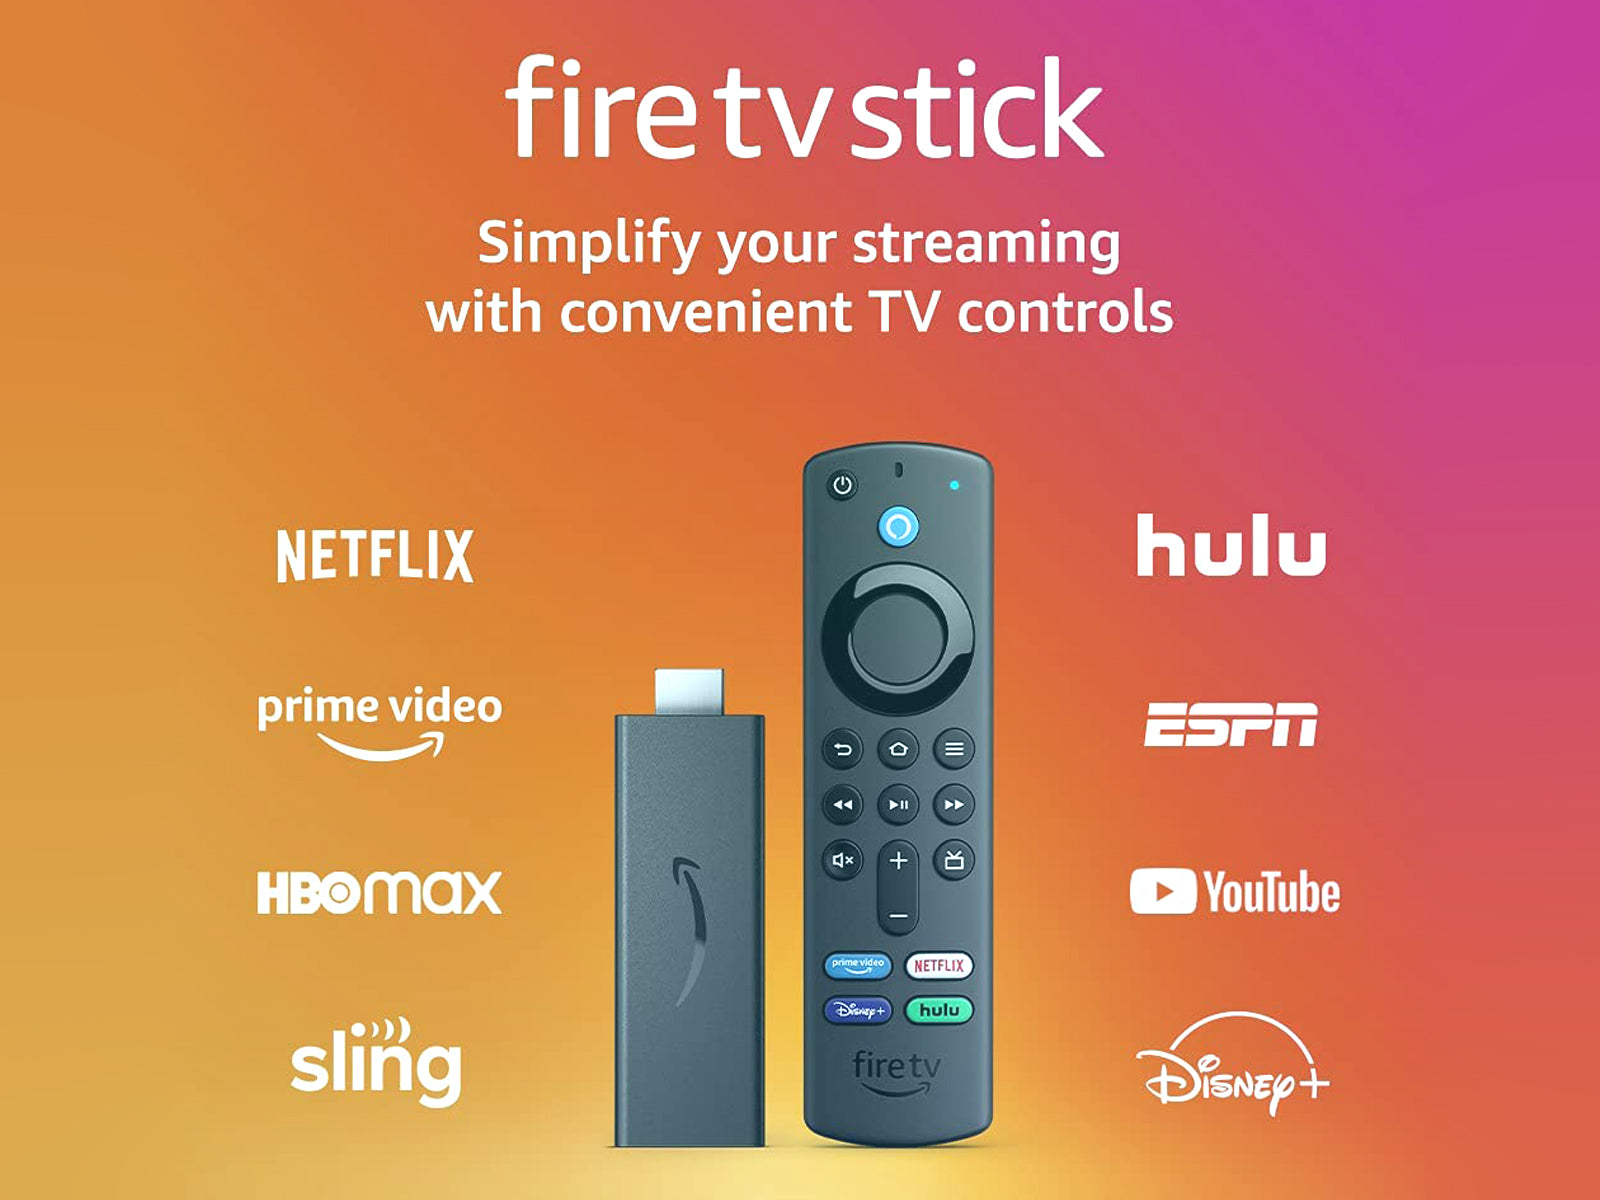 Fire TV Stick Lite For Sale Online in Ireland